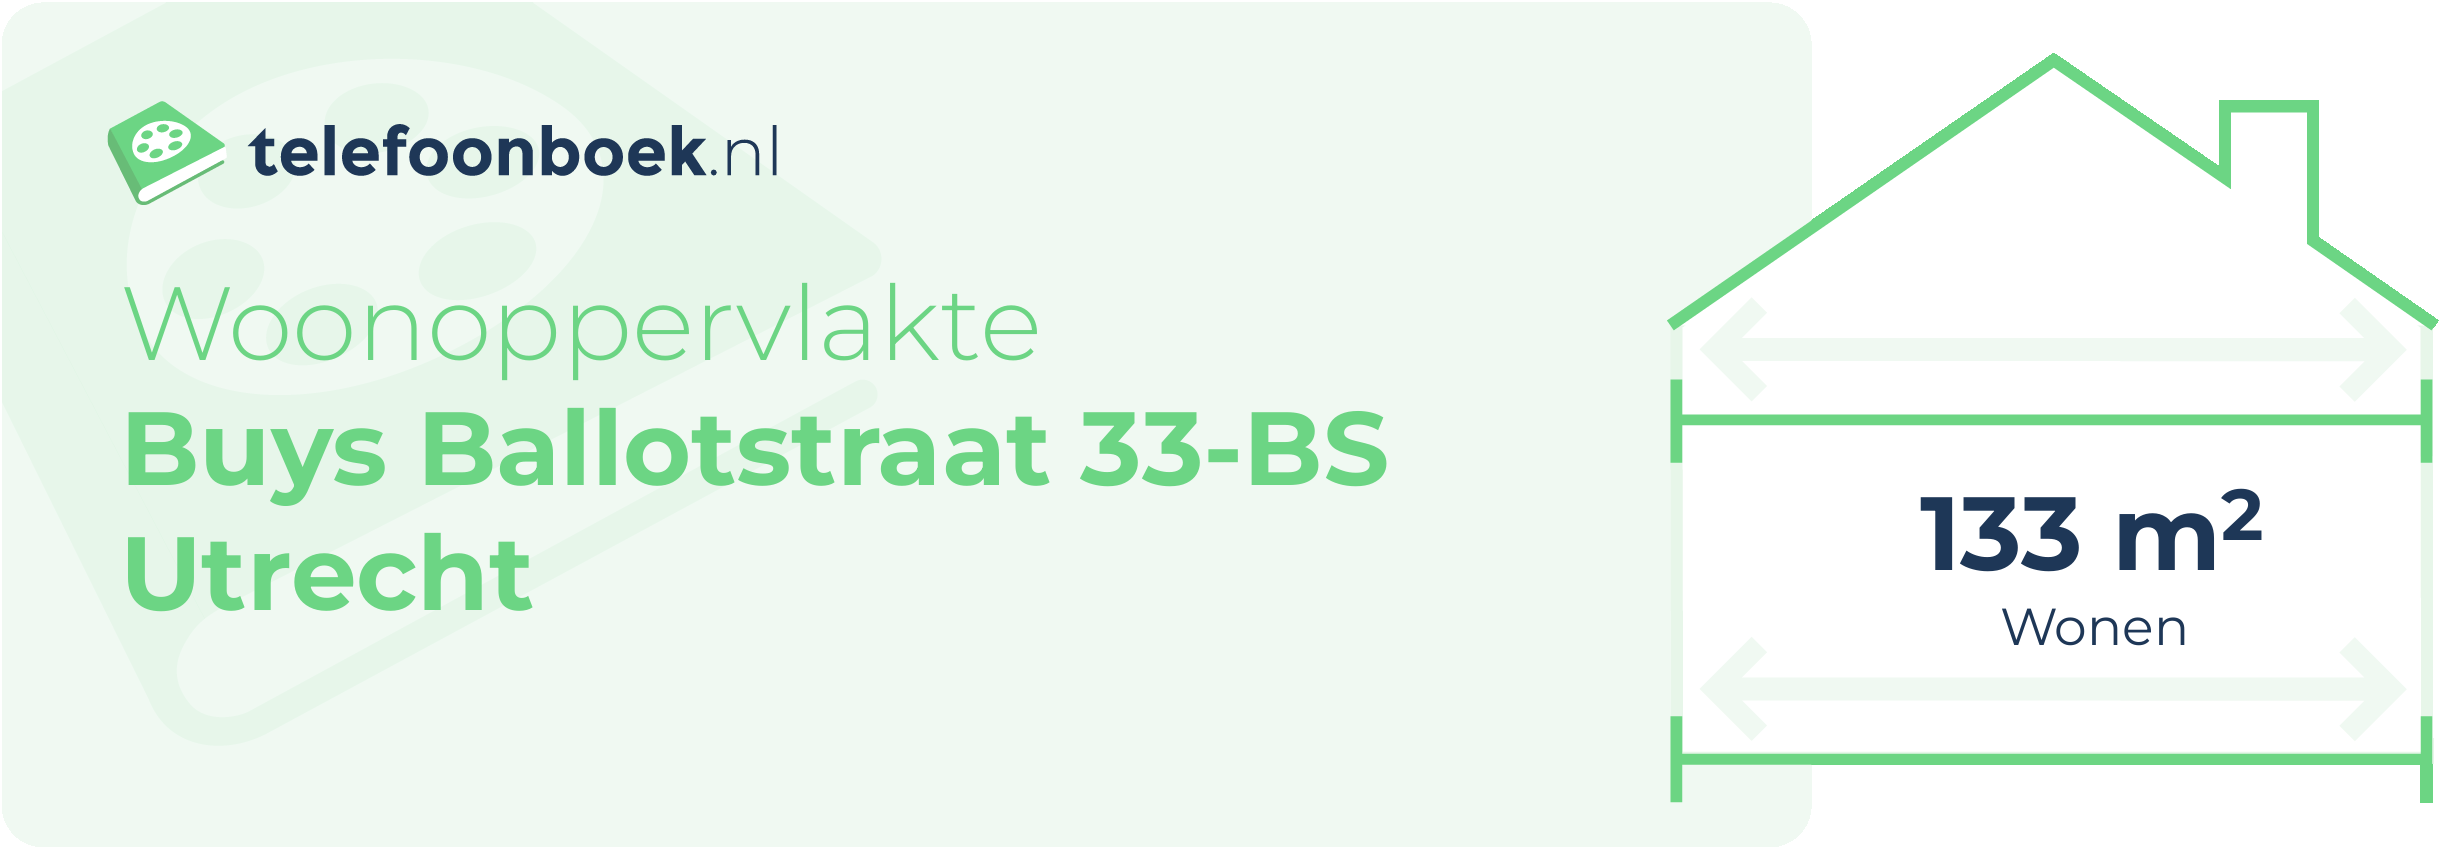 Woonoppervlakte Buys Ballotstraat 33-BS Utrecht